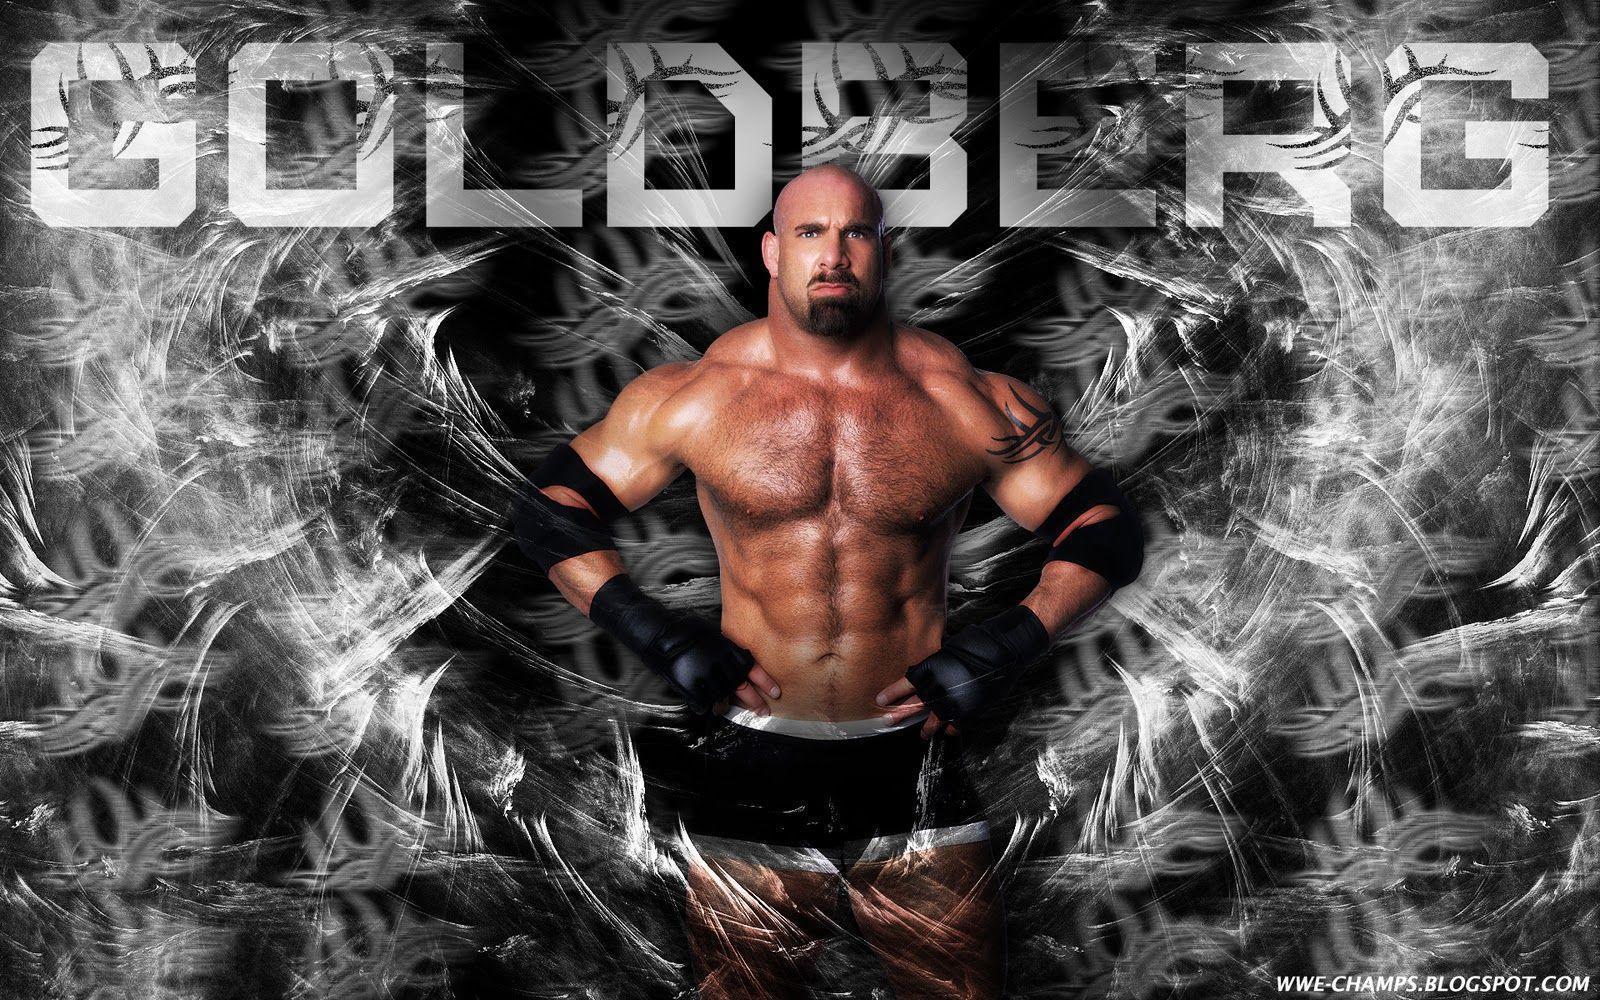 WWE SUPER SJ wallpaper  Bill Goldberg wrestler wallpaper by kupy  wrestling  Facebook